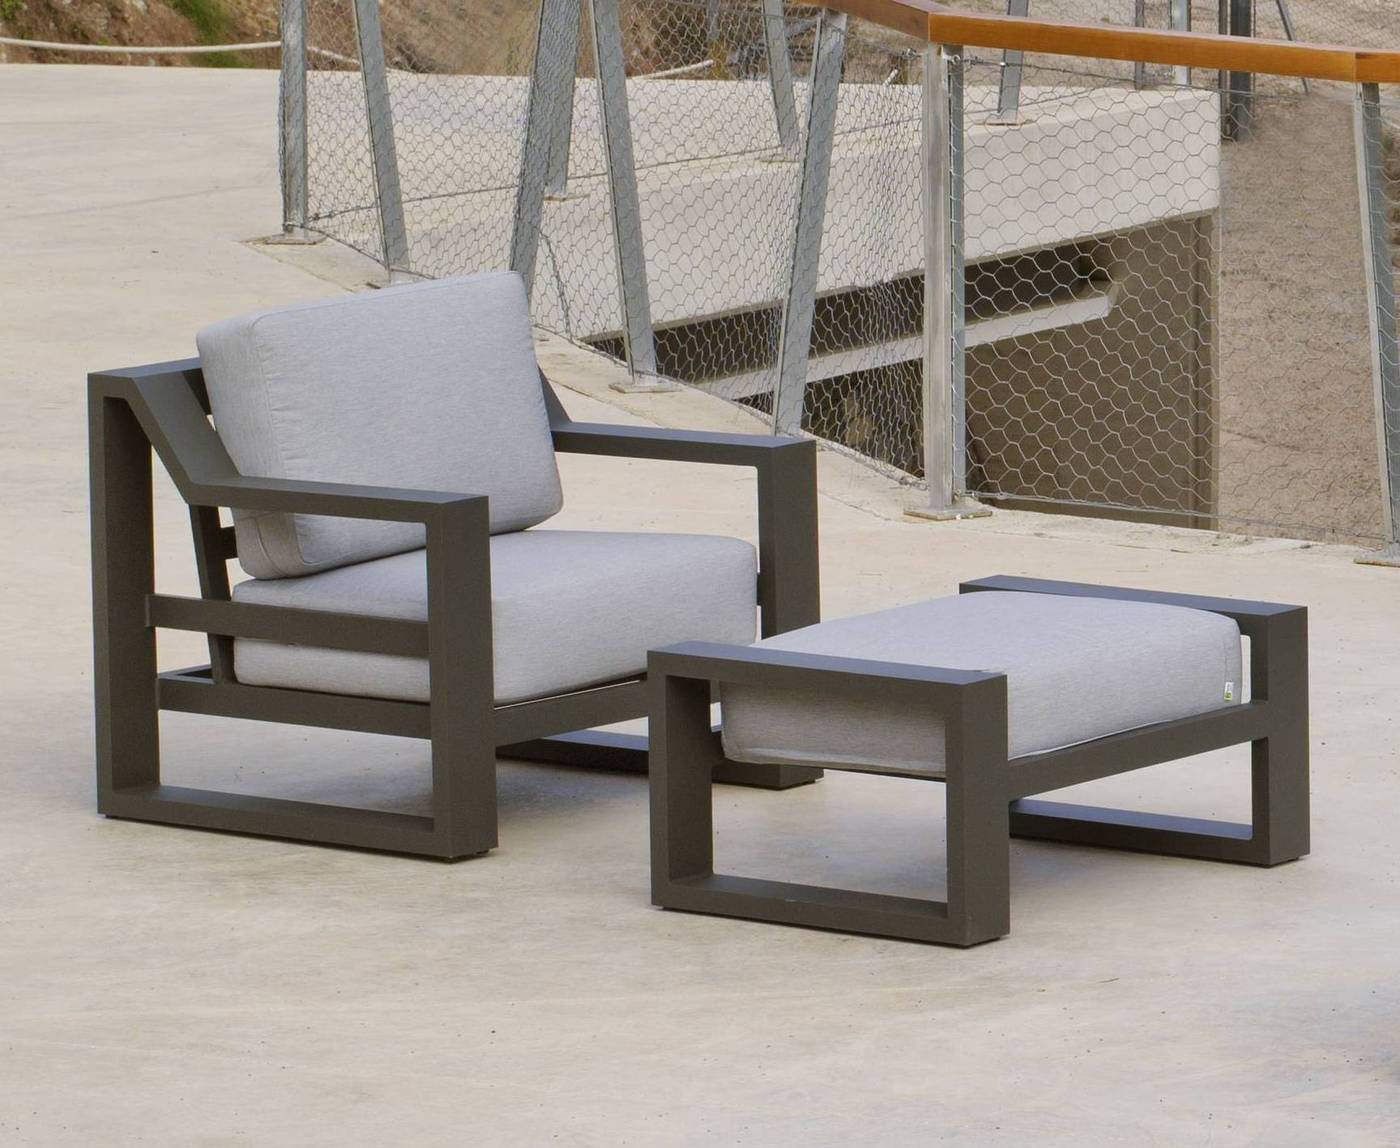 Set Aluminio Luxe Rosenborg-10 - Conjunto lujo para jardín: 1 sofá de 3 plazas + 2 sillones + 2 reposapiés + 1 mesa de centro + cojines. Estructura de alumino reforzado color blanco, antracita o champagne.